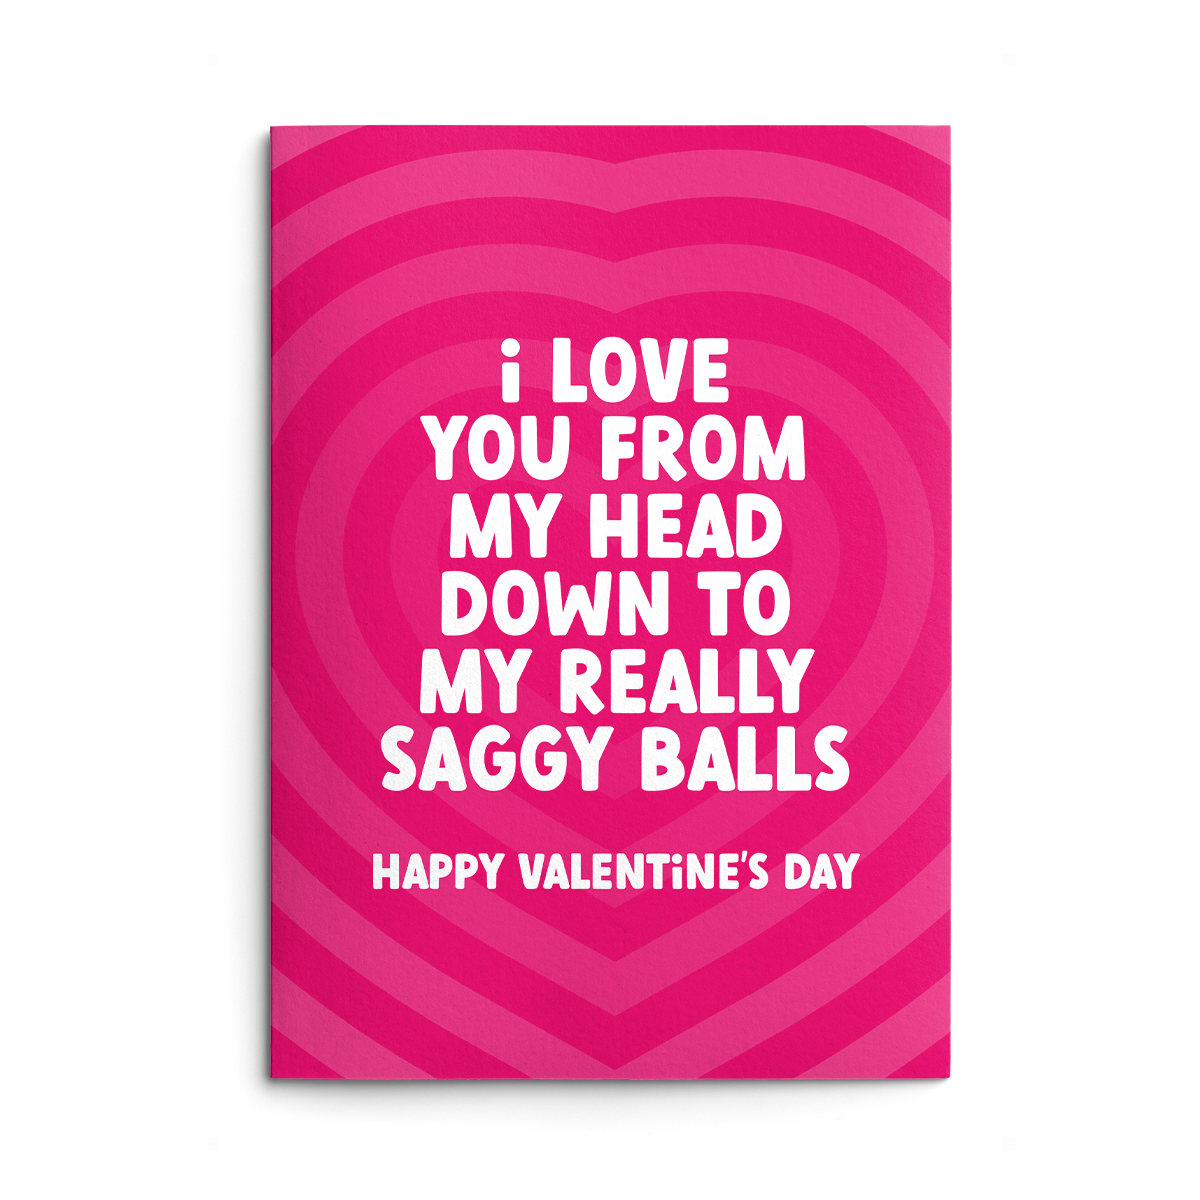 Saggy Balls Rude Valentines Card